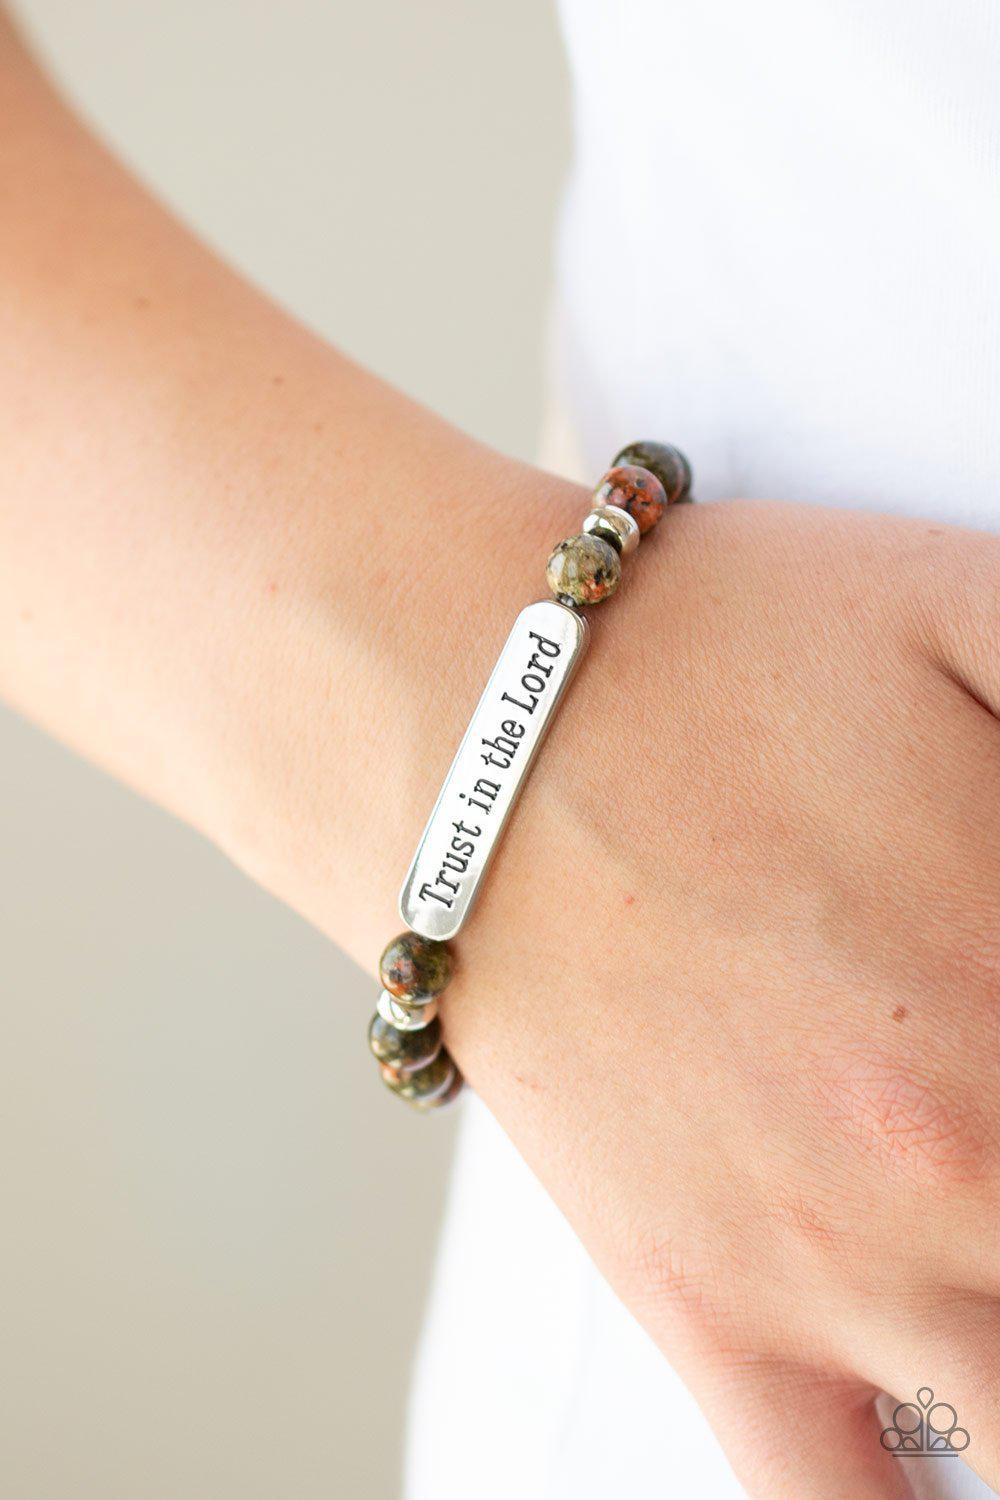 Trust Always - Multi-color Stone Stretch Word Bracelet - Paparazzi Accessories-CarasShop.com - $5 Jewelry by Cara Jewels